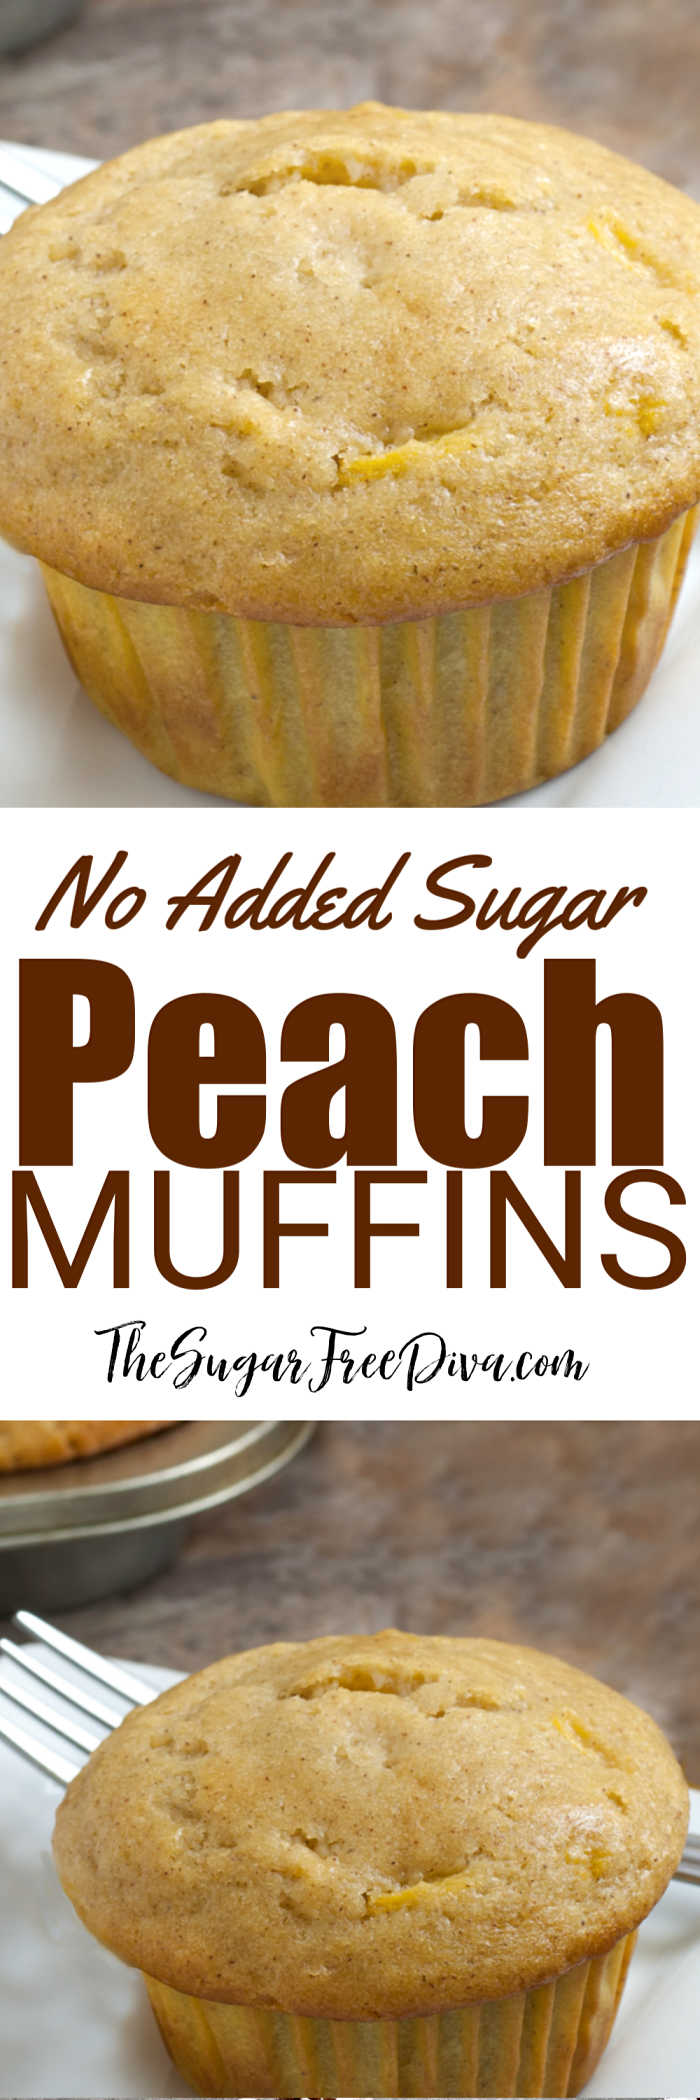 No Added Sugar Peach Muffins